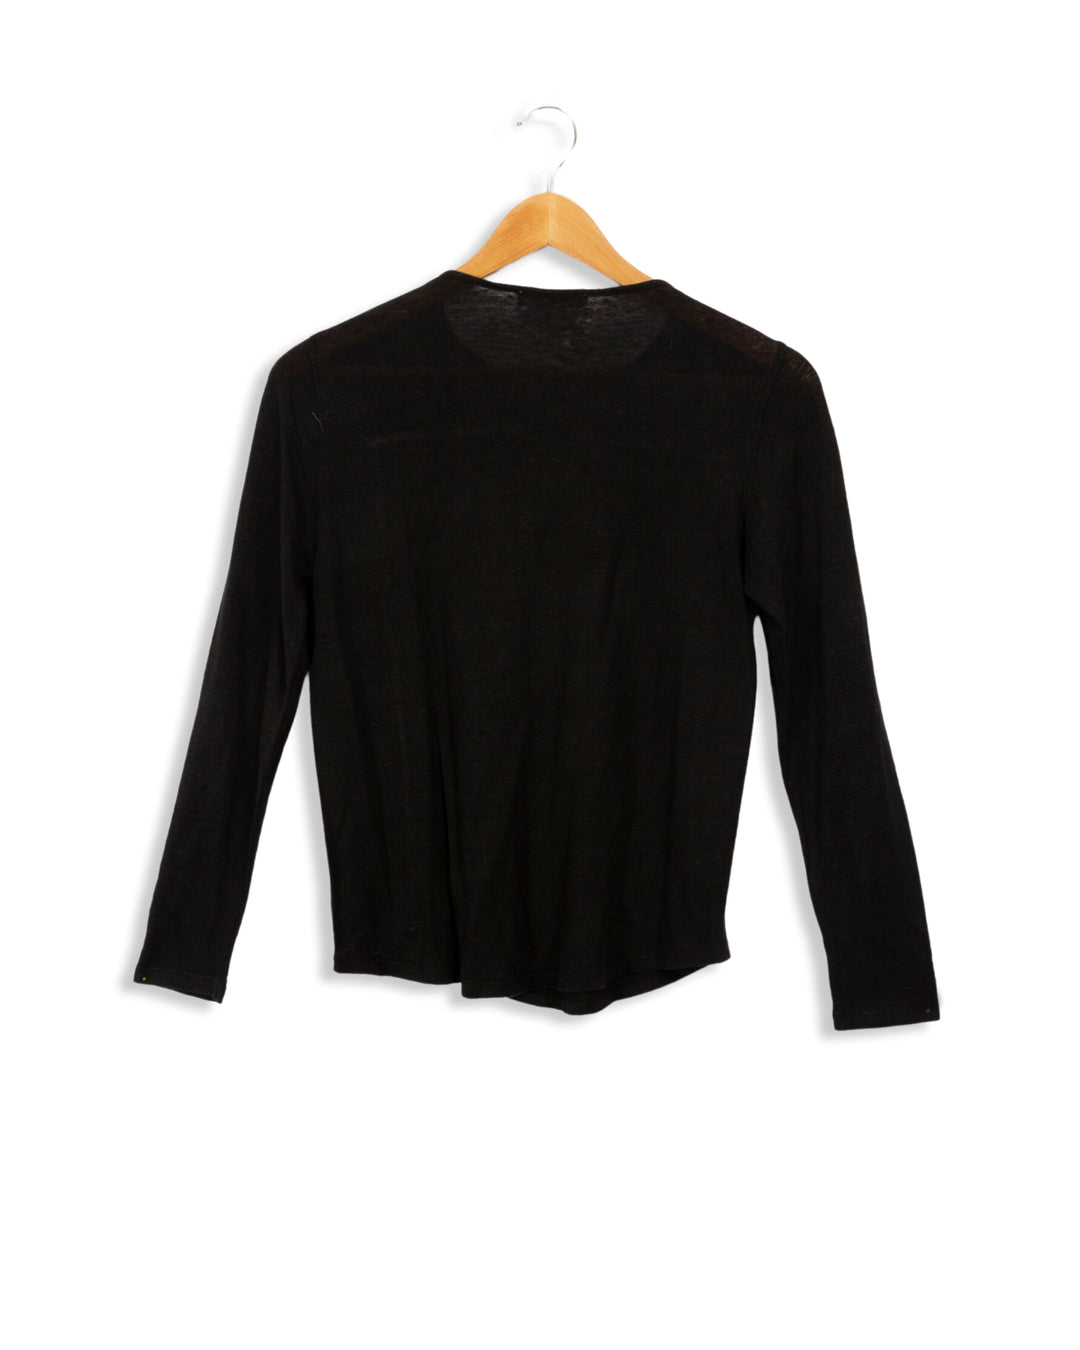 Sandro black sweater - T1